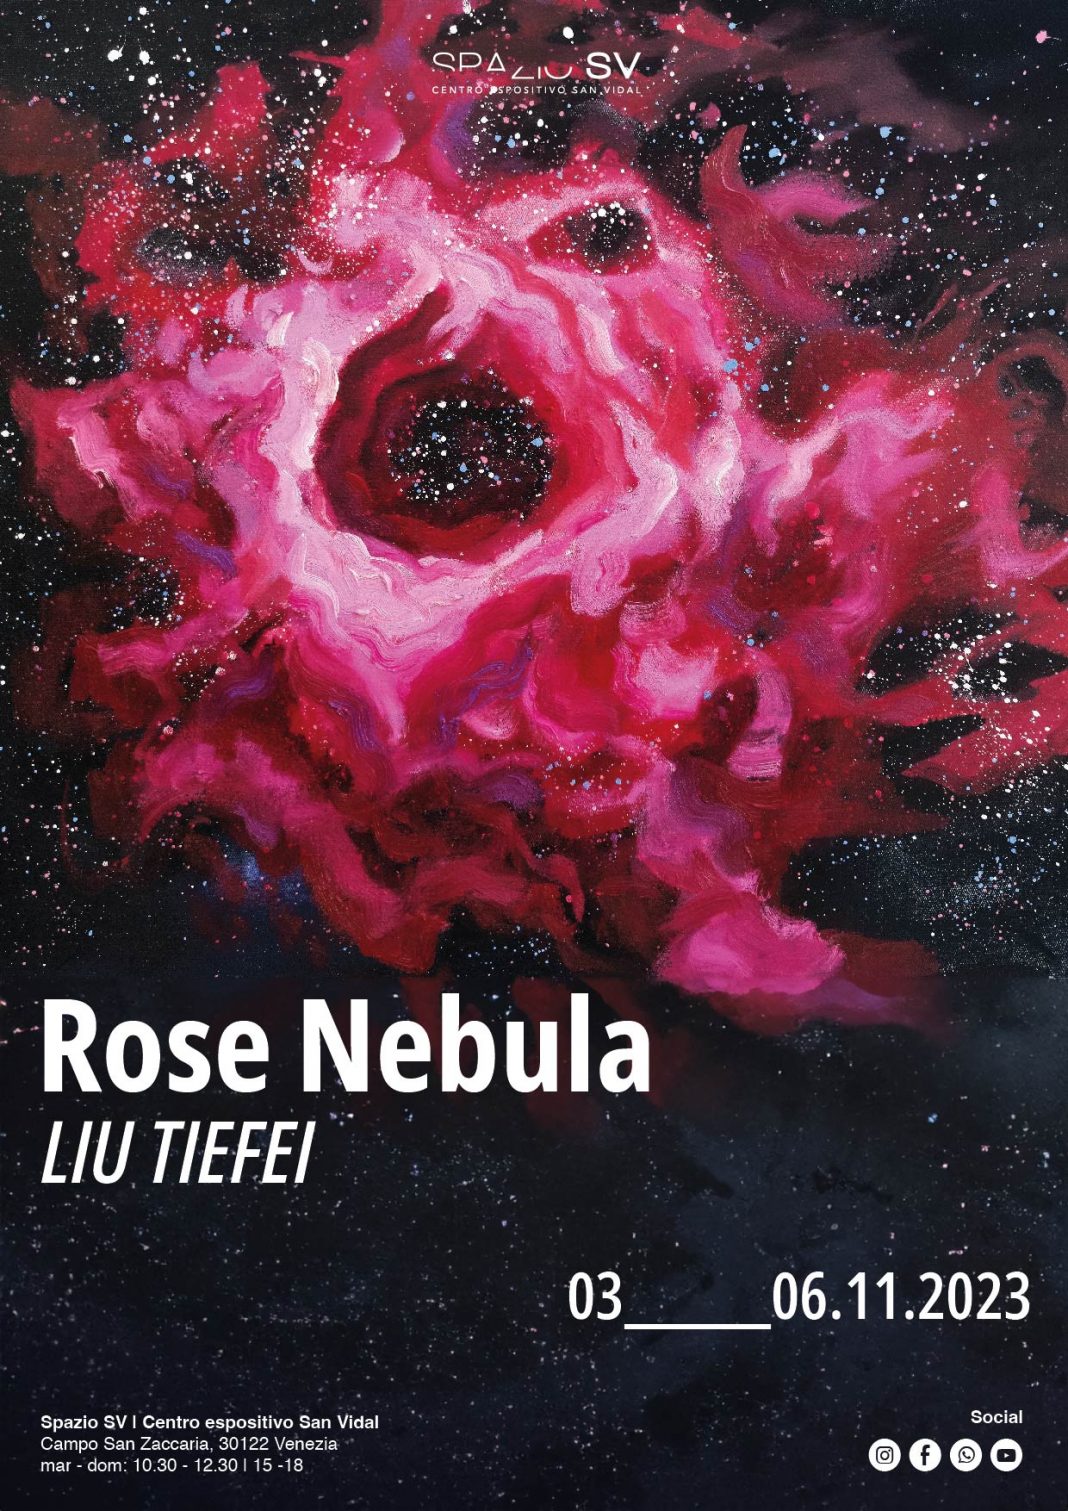 Rose Nebulahttps://www.exibart.com/repository/media/formidable/11/img/d98/locandina-1068x1511.jpg